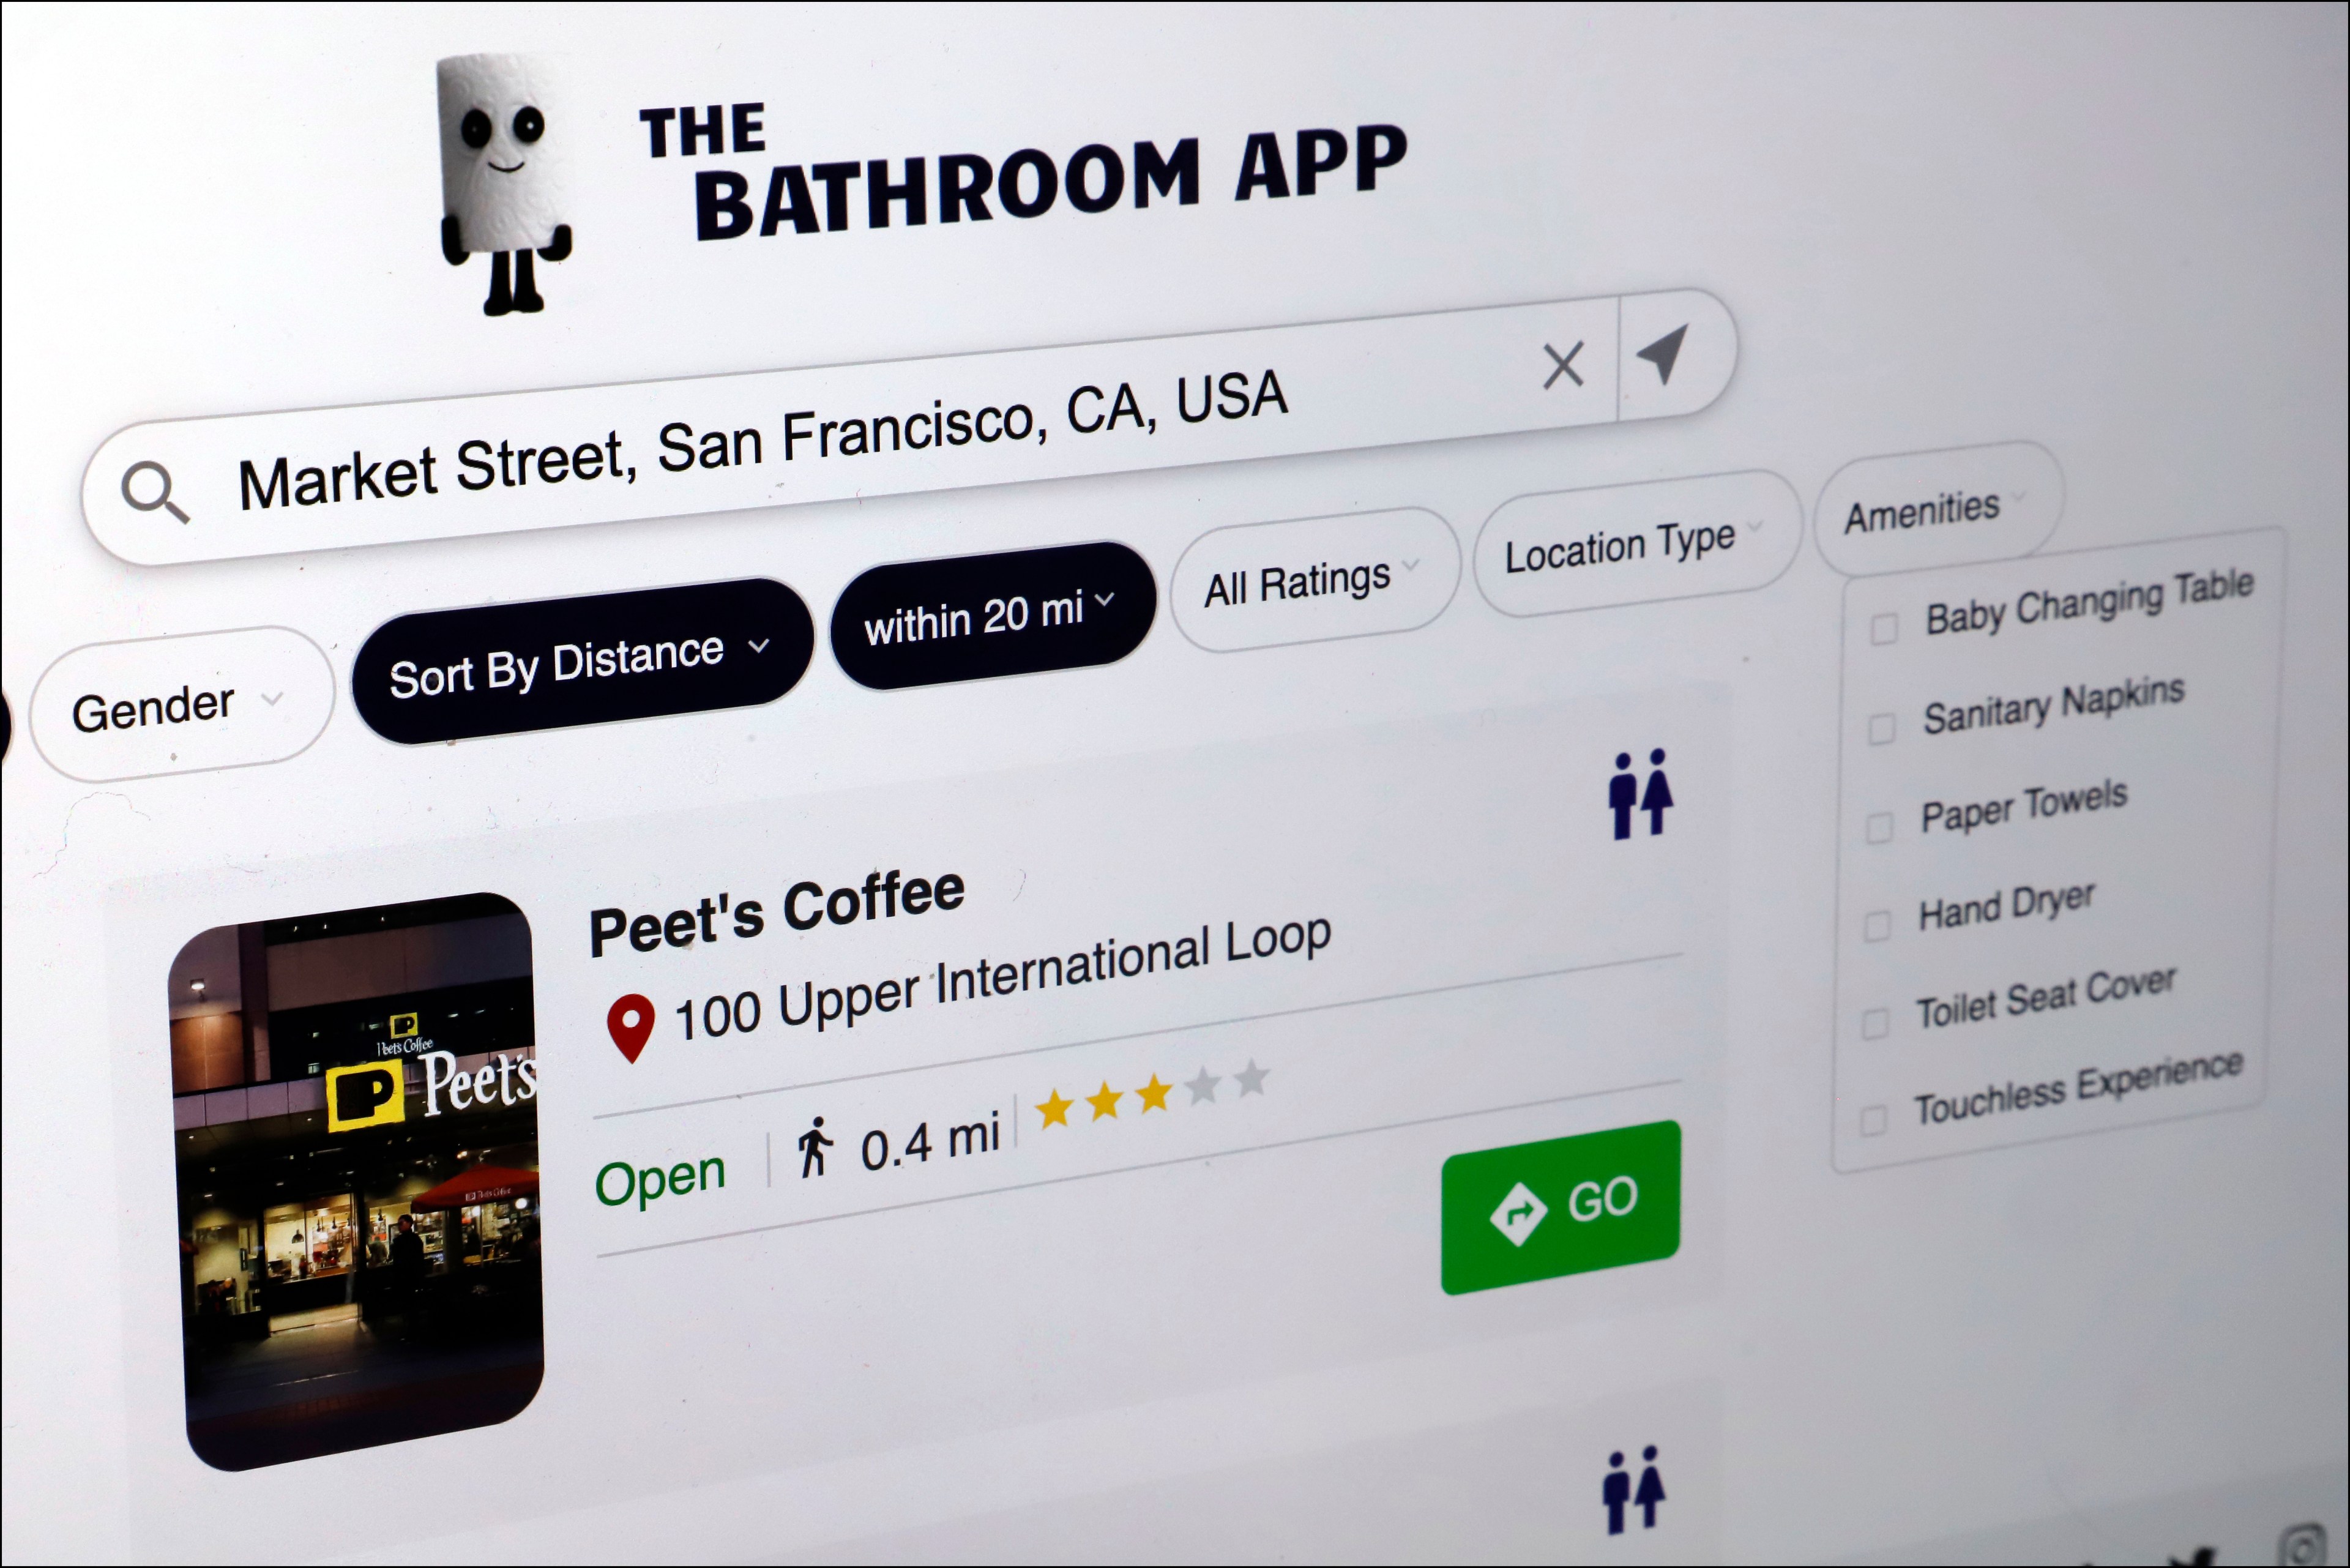 A close-up shot shows a bathroom locator app on a computer screen.